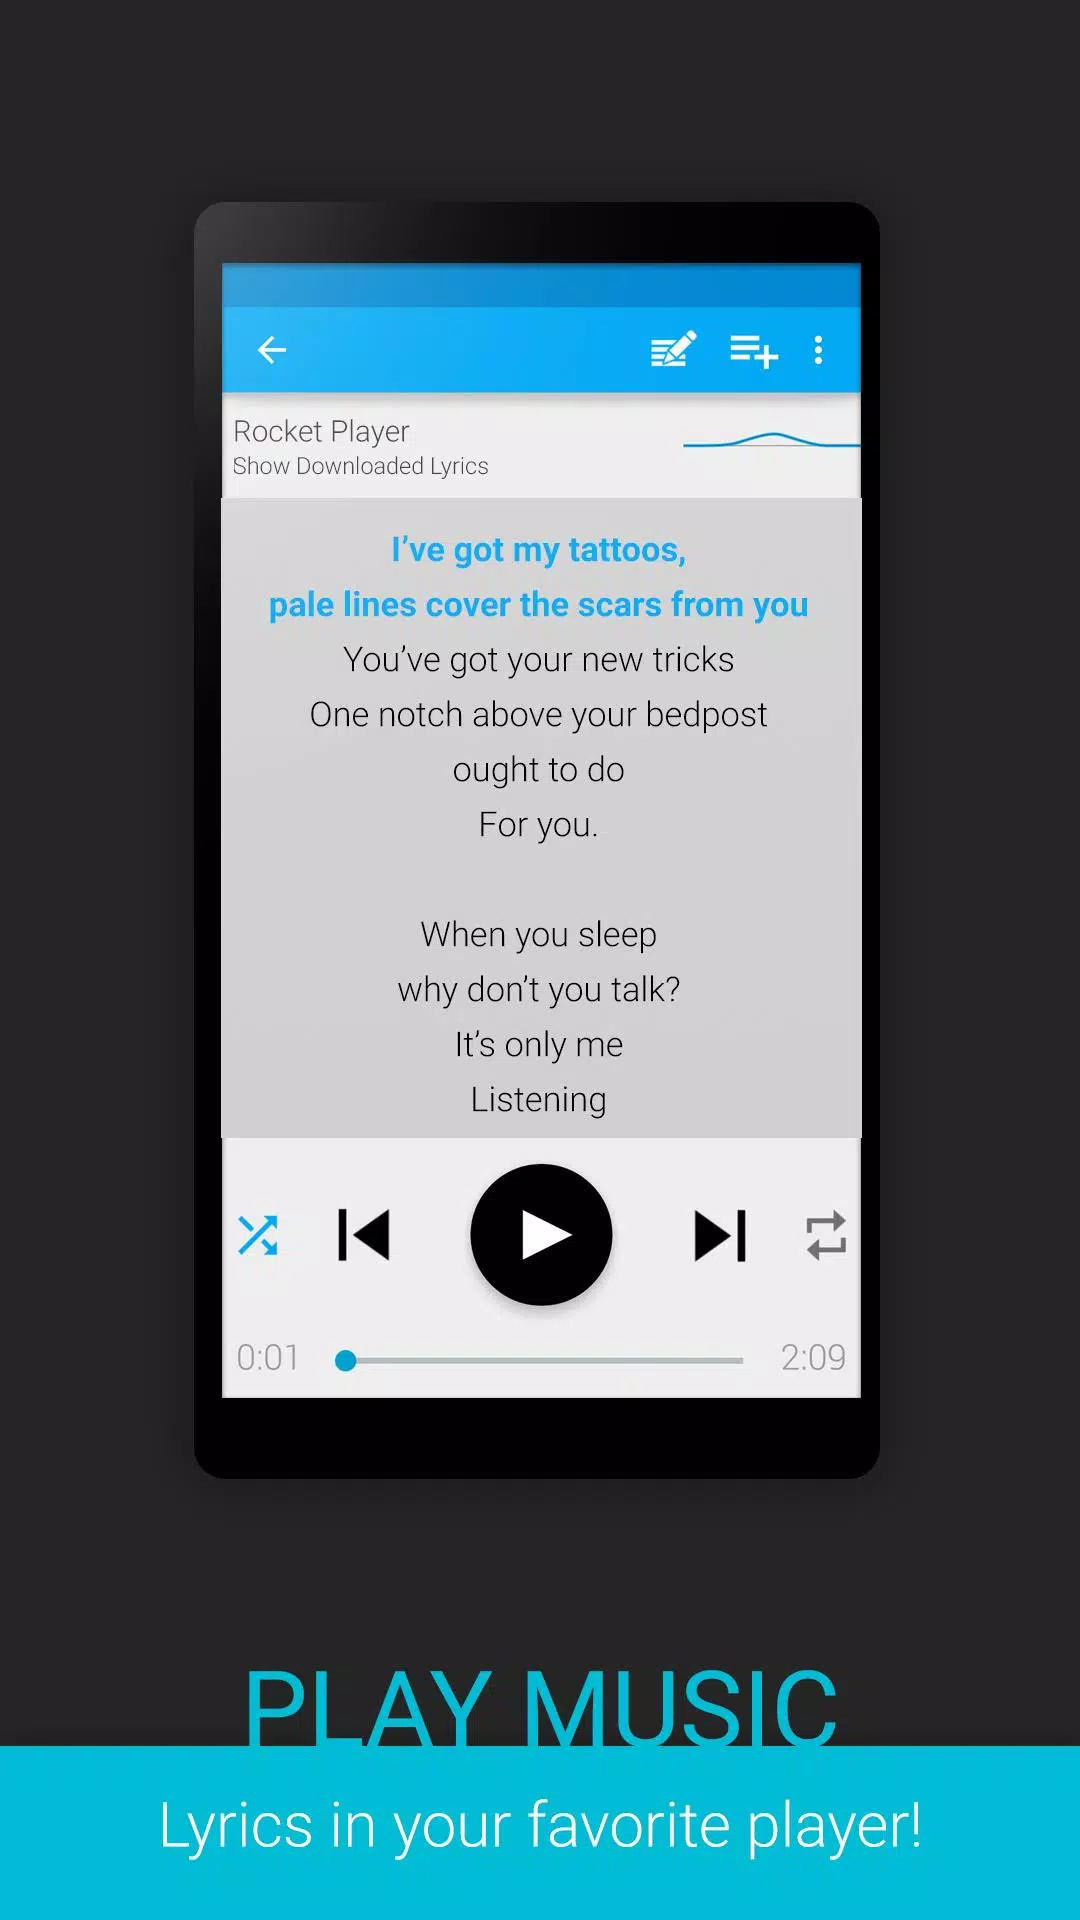 Meduza - Musics Lyrics APK for Android Download